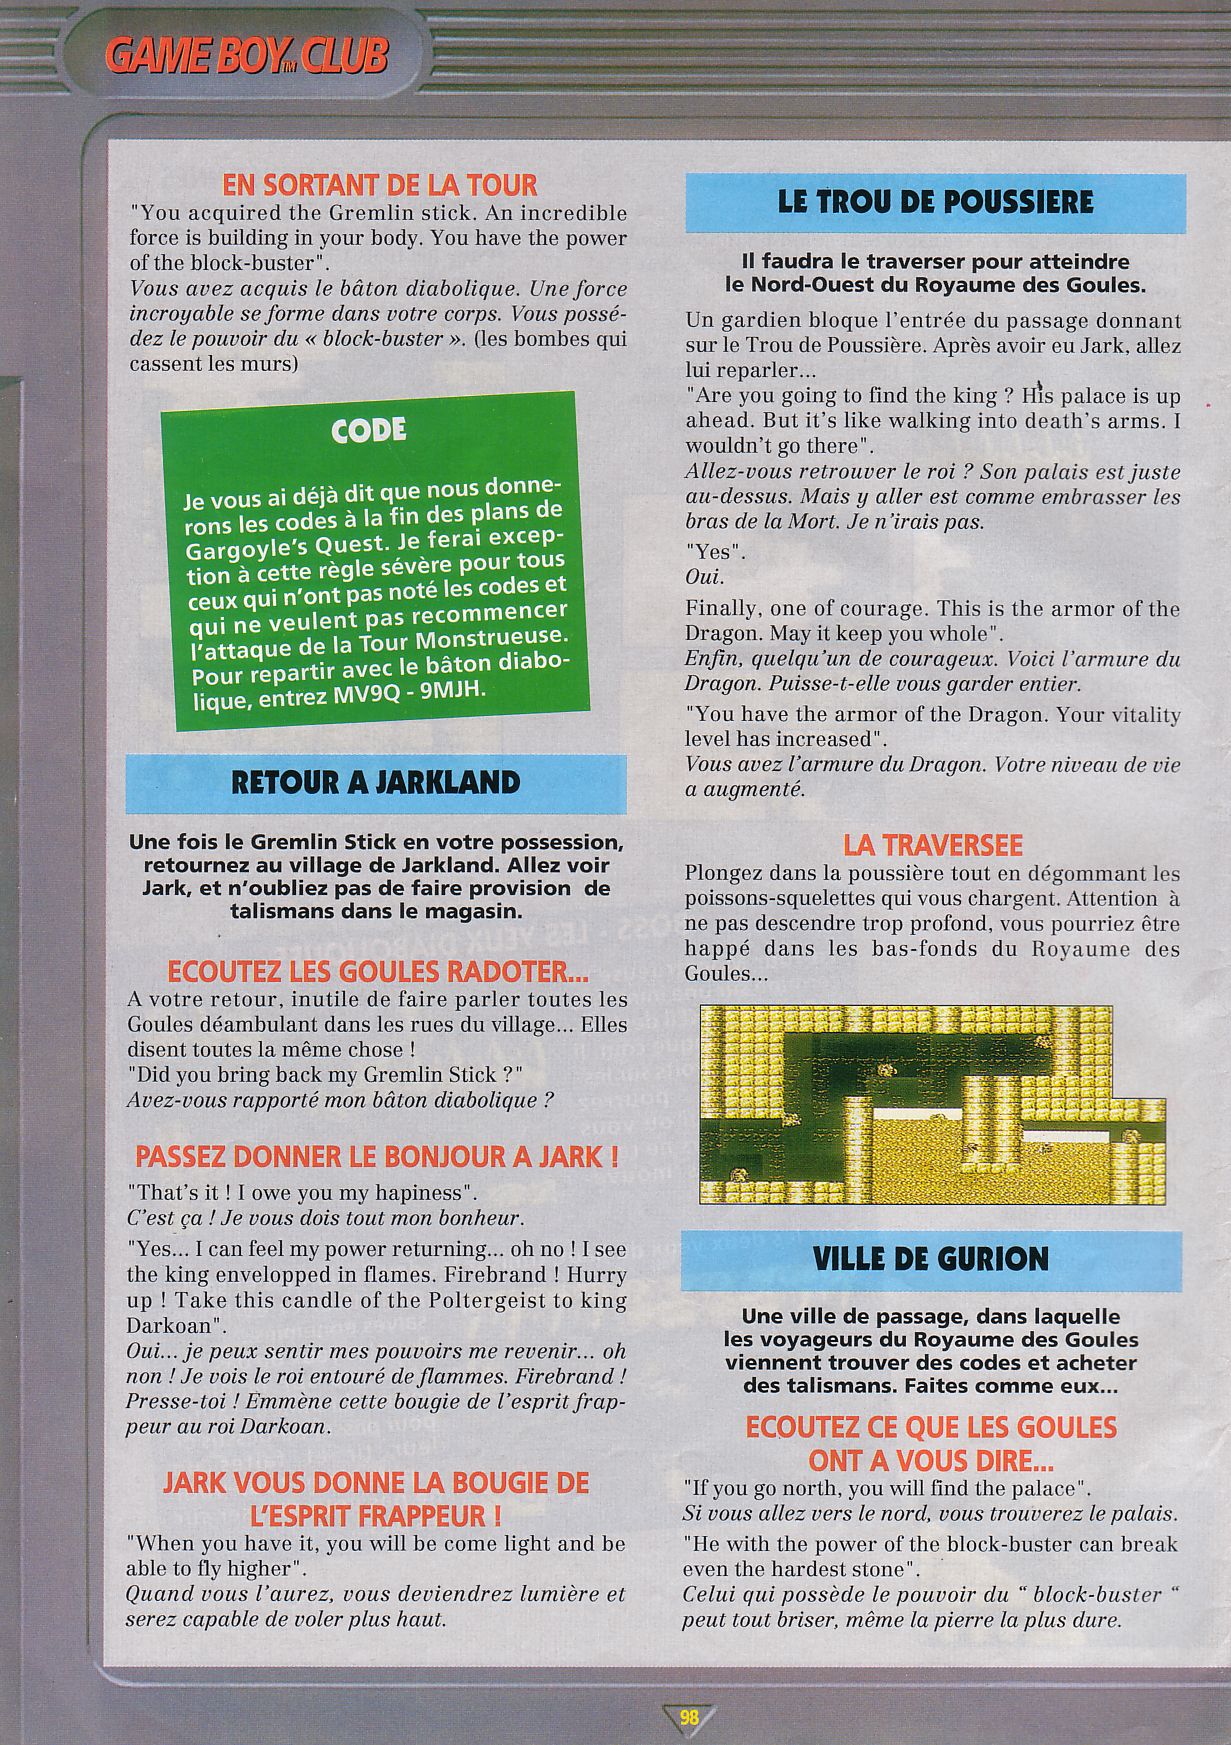 tests//1155/Nintendo Player 005 - Page 098 (1992-07-08).jpg